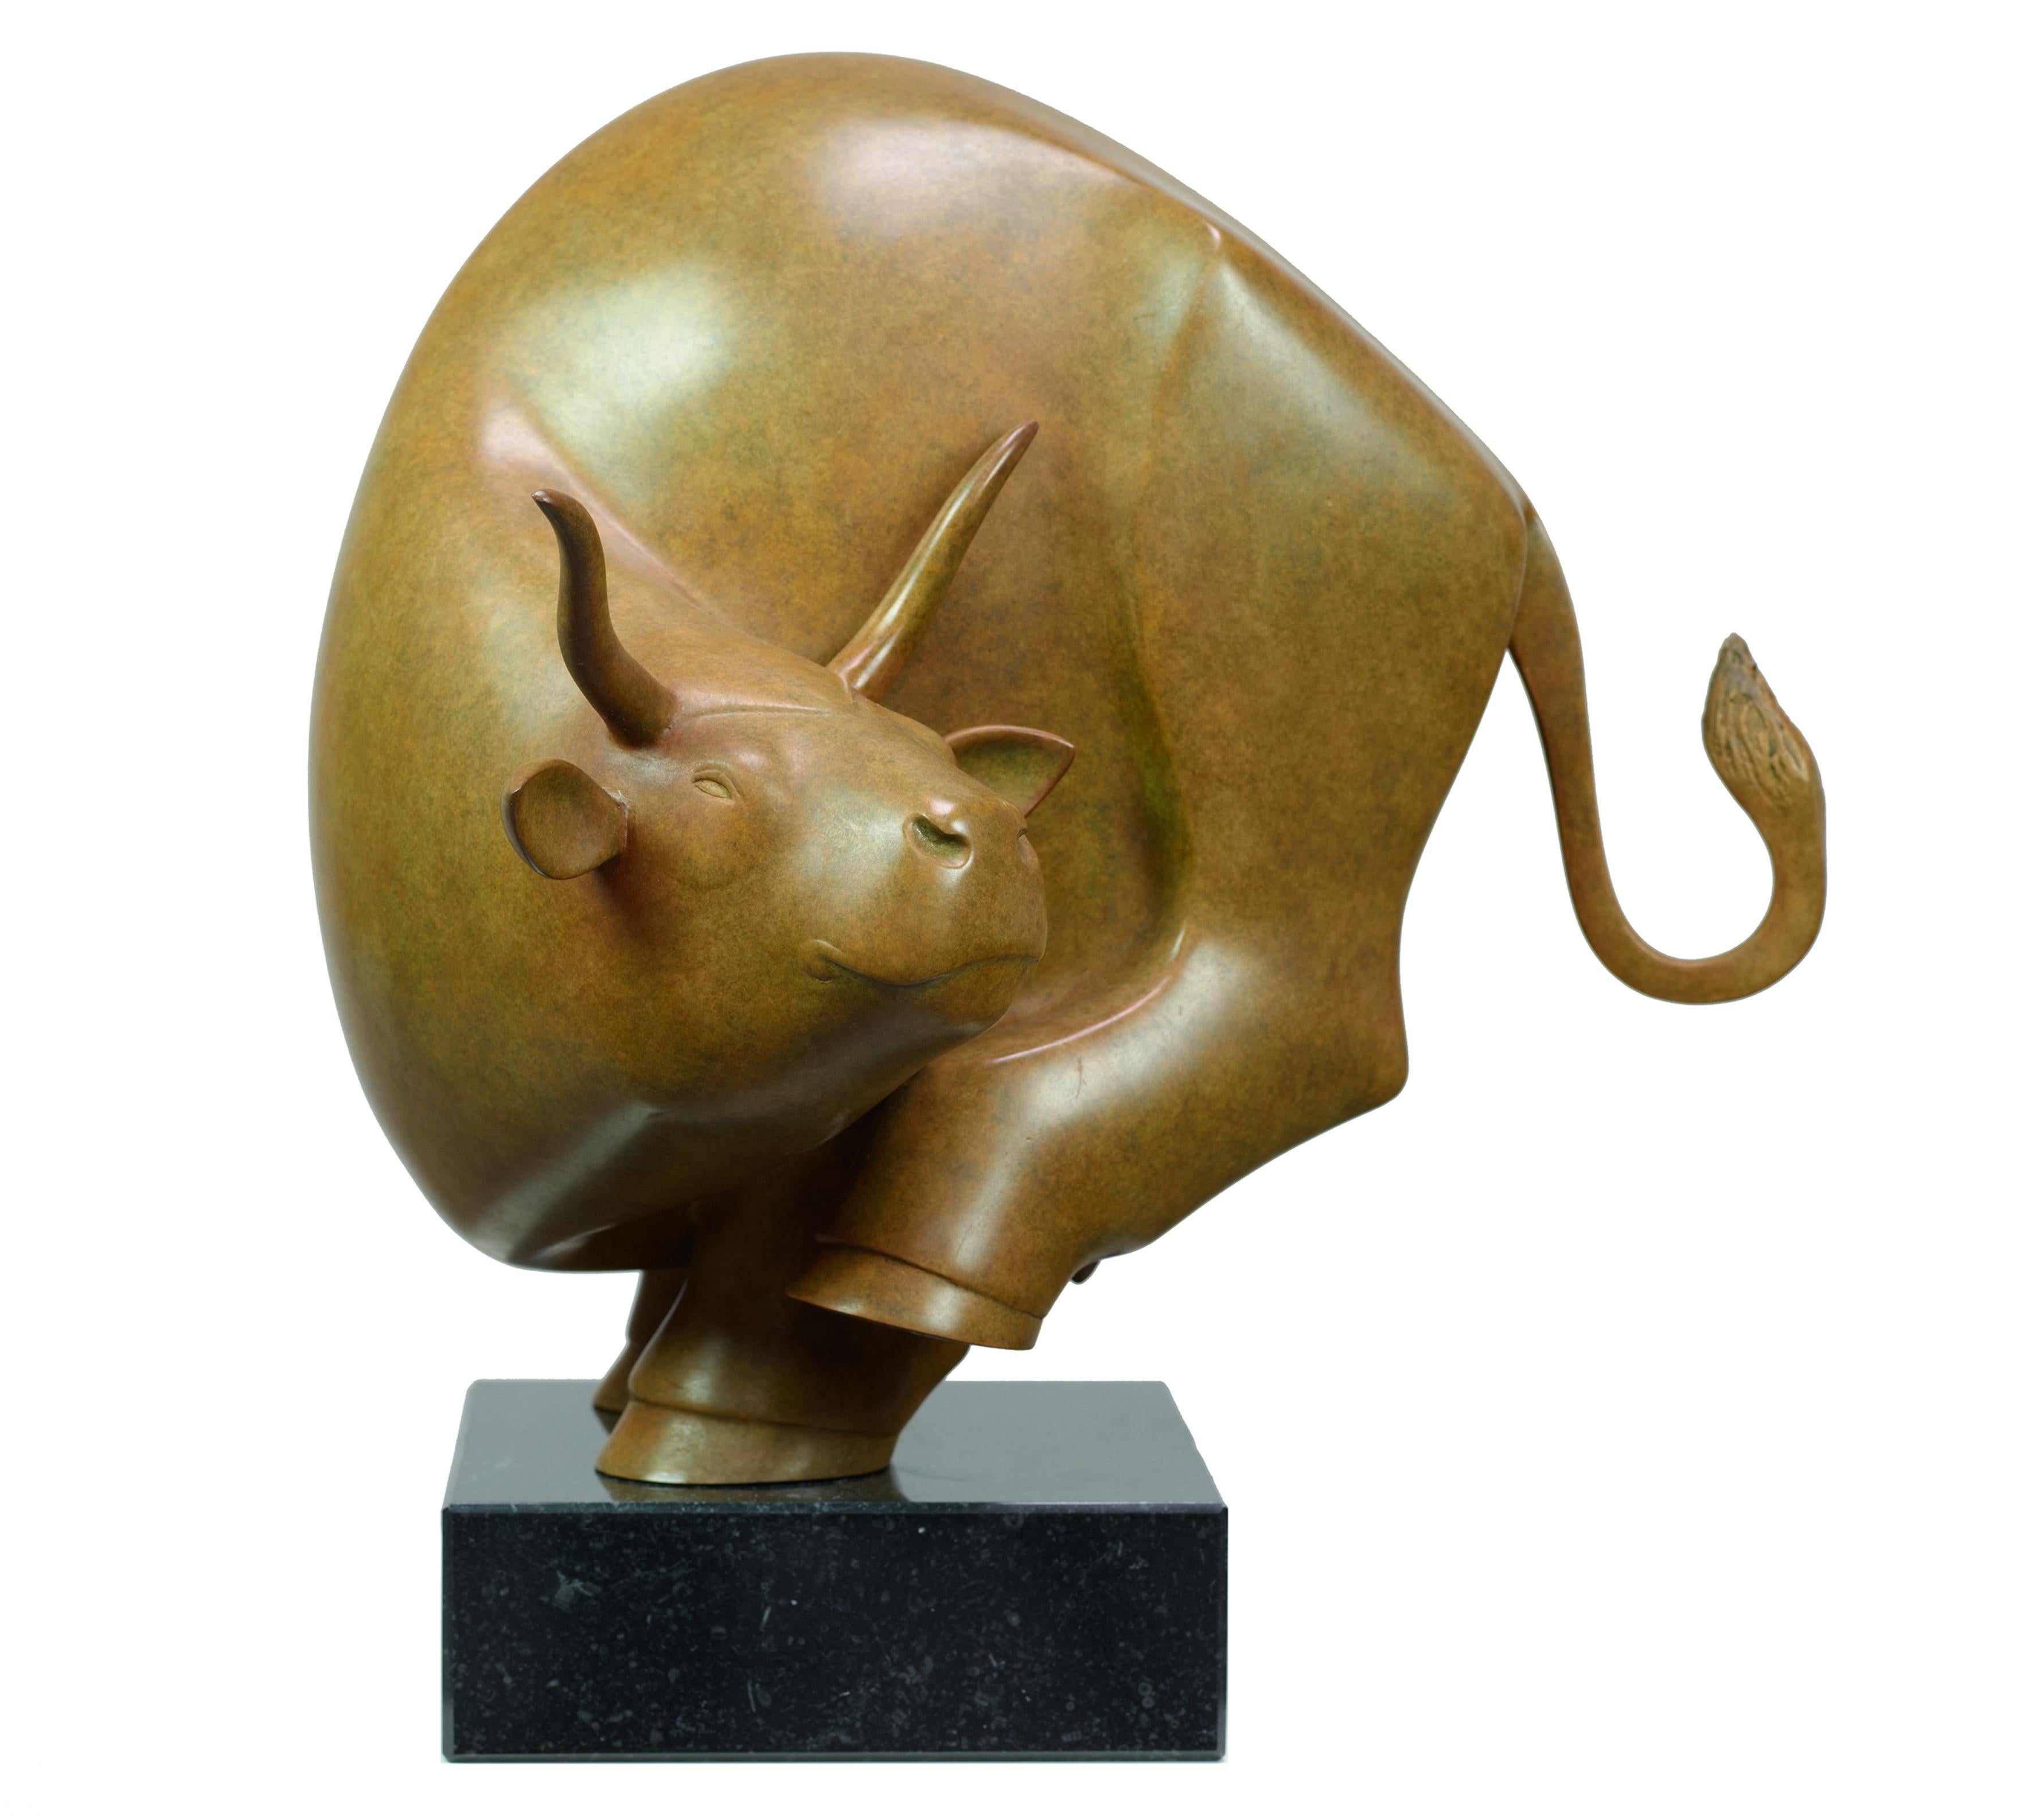 Figurative Sculpture Evert den Hartog - Stier Klein Bull Petite Sculpture en bronze Animal Contemporary